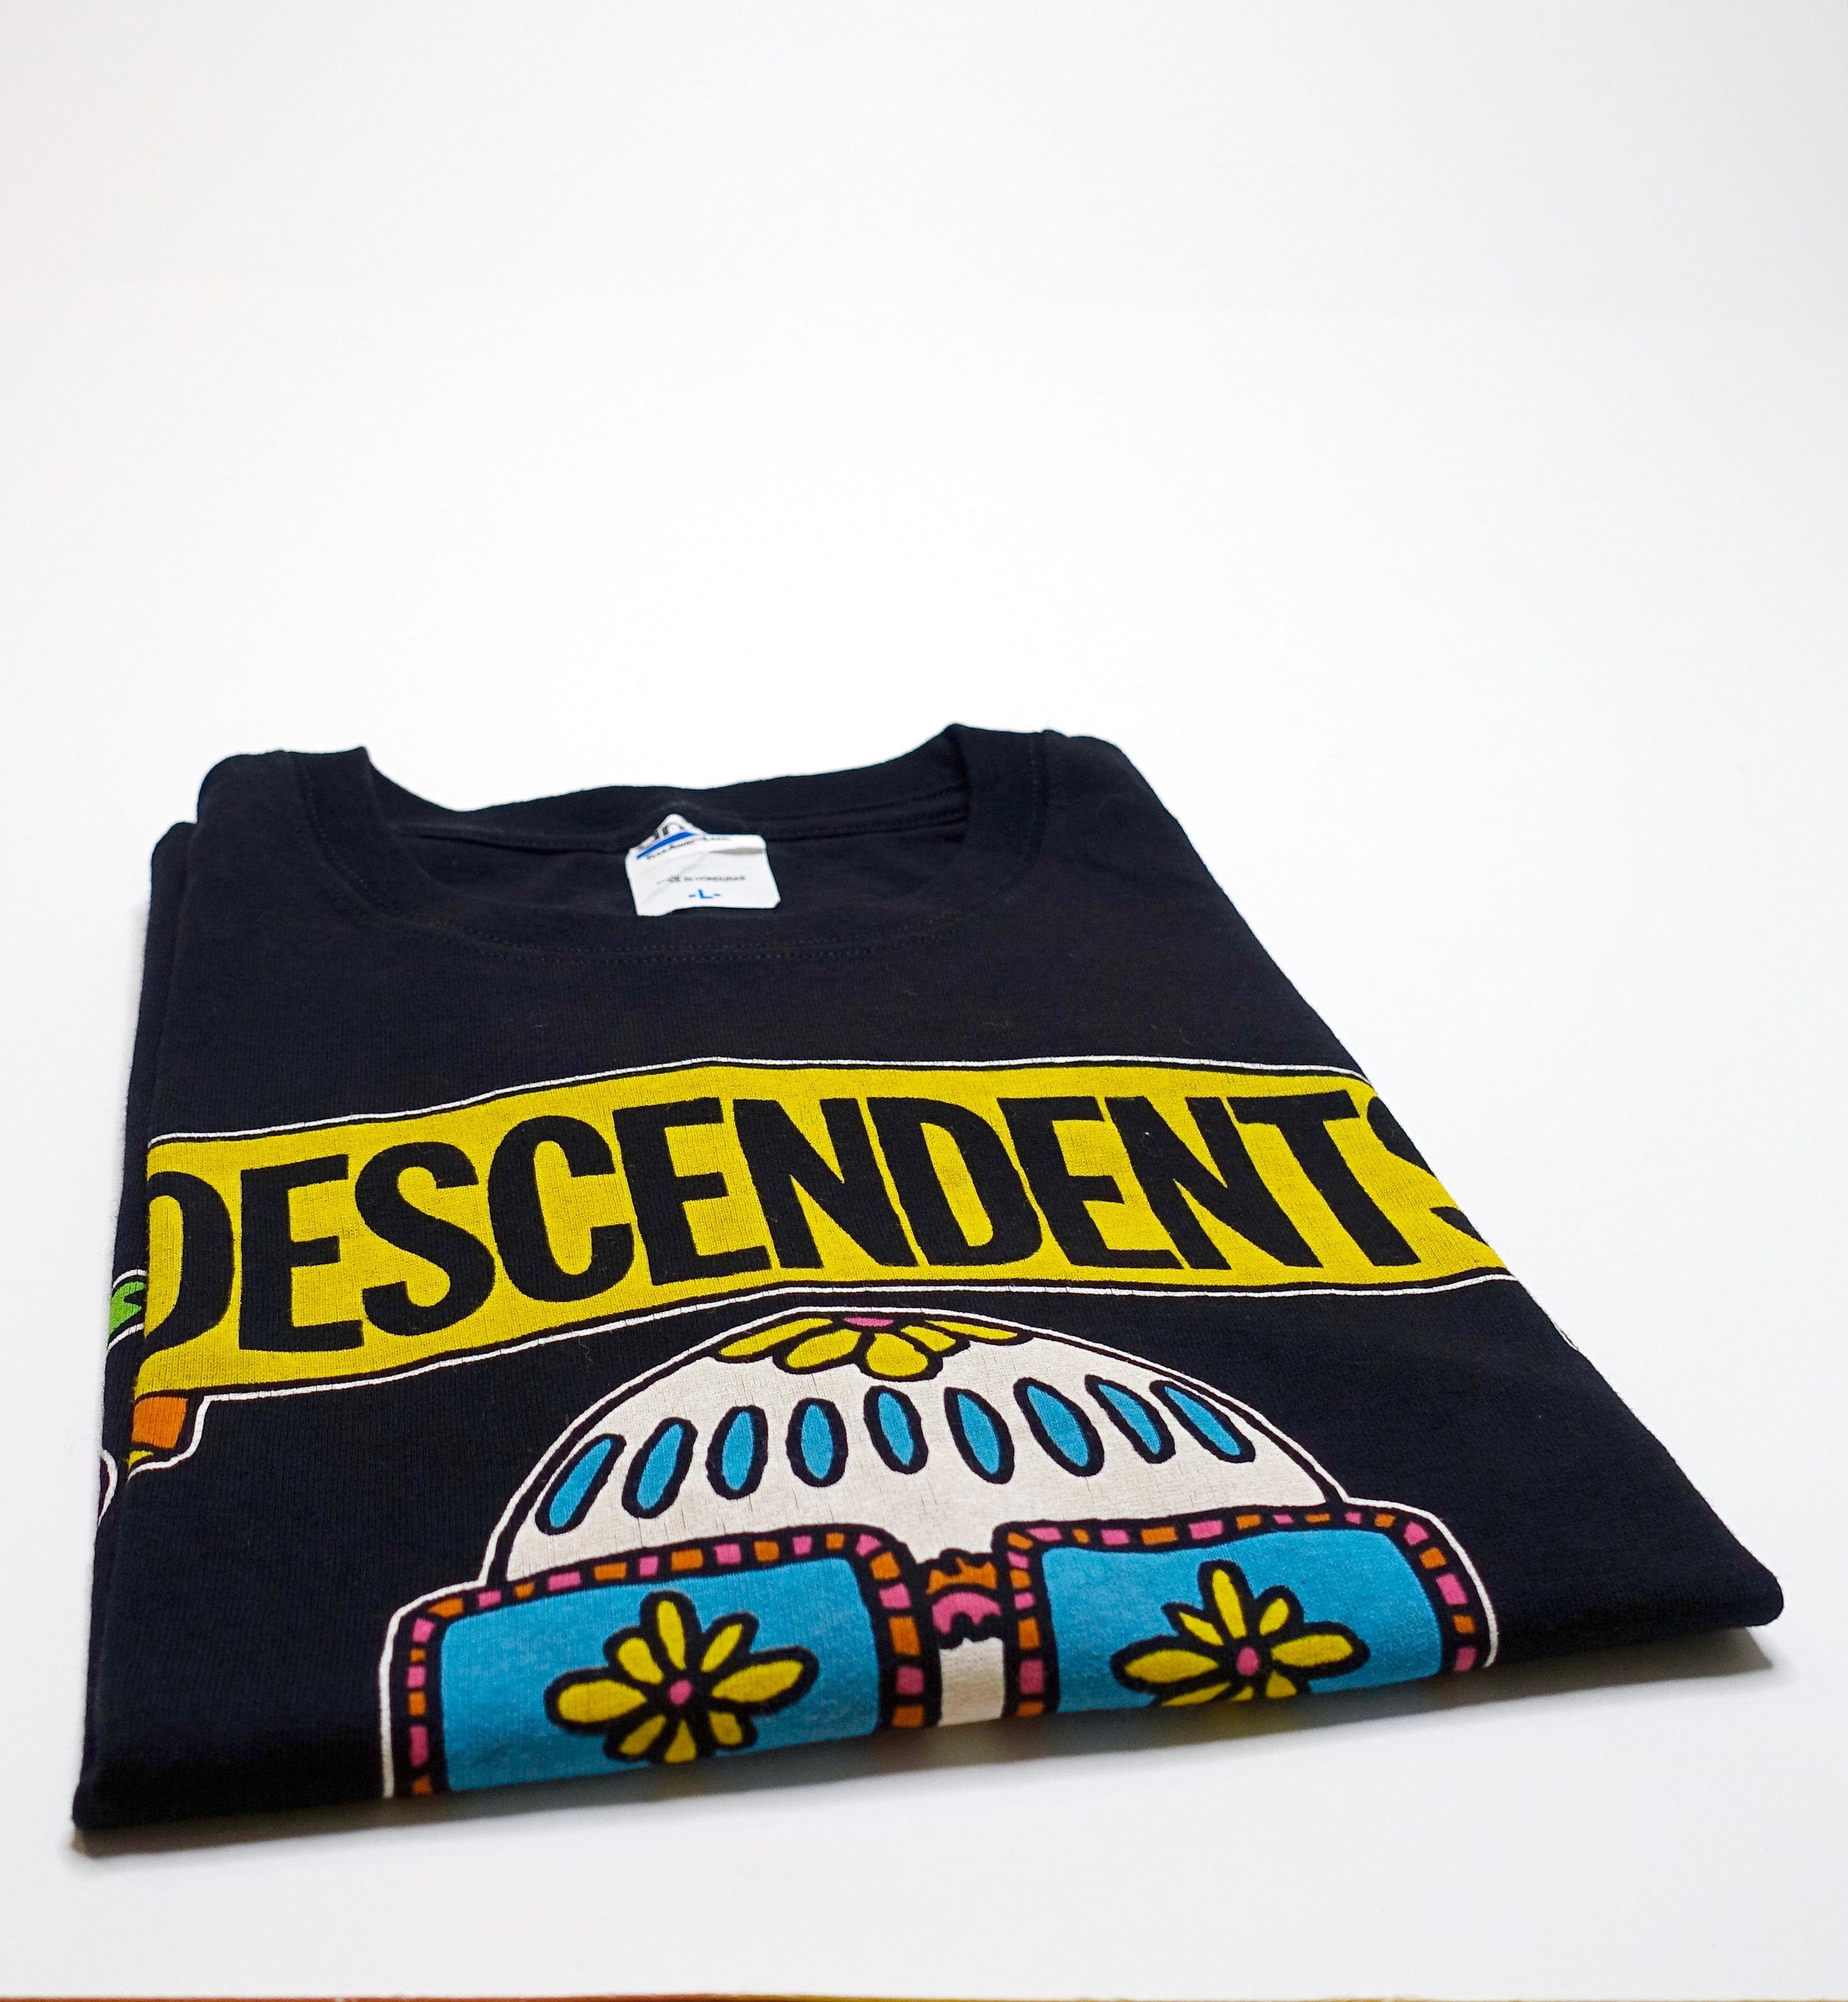 Descendents - Day Of The Dork Tour Shirt Size Large